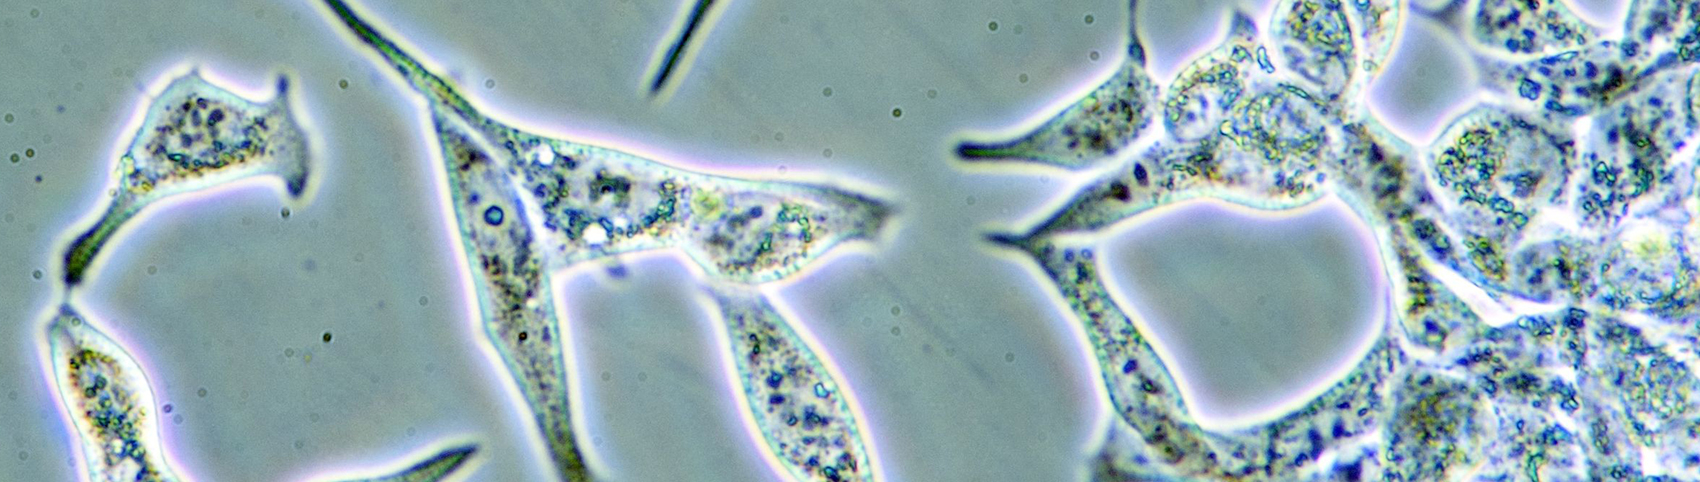 Image microscopique de cellules